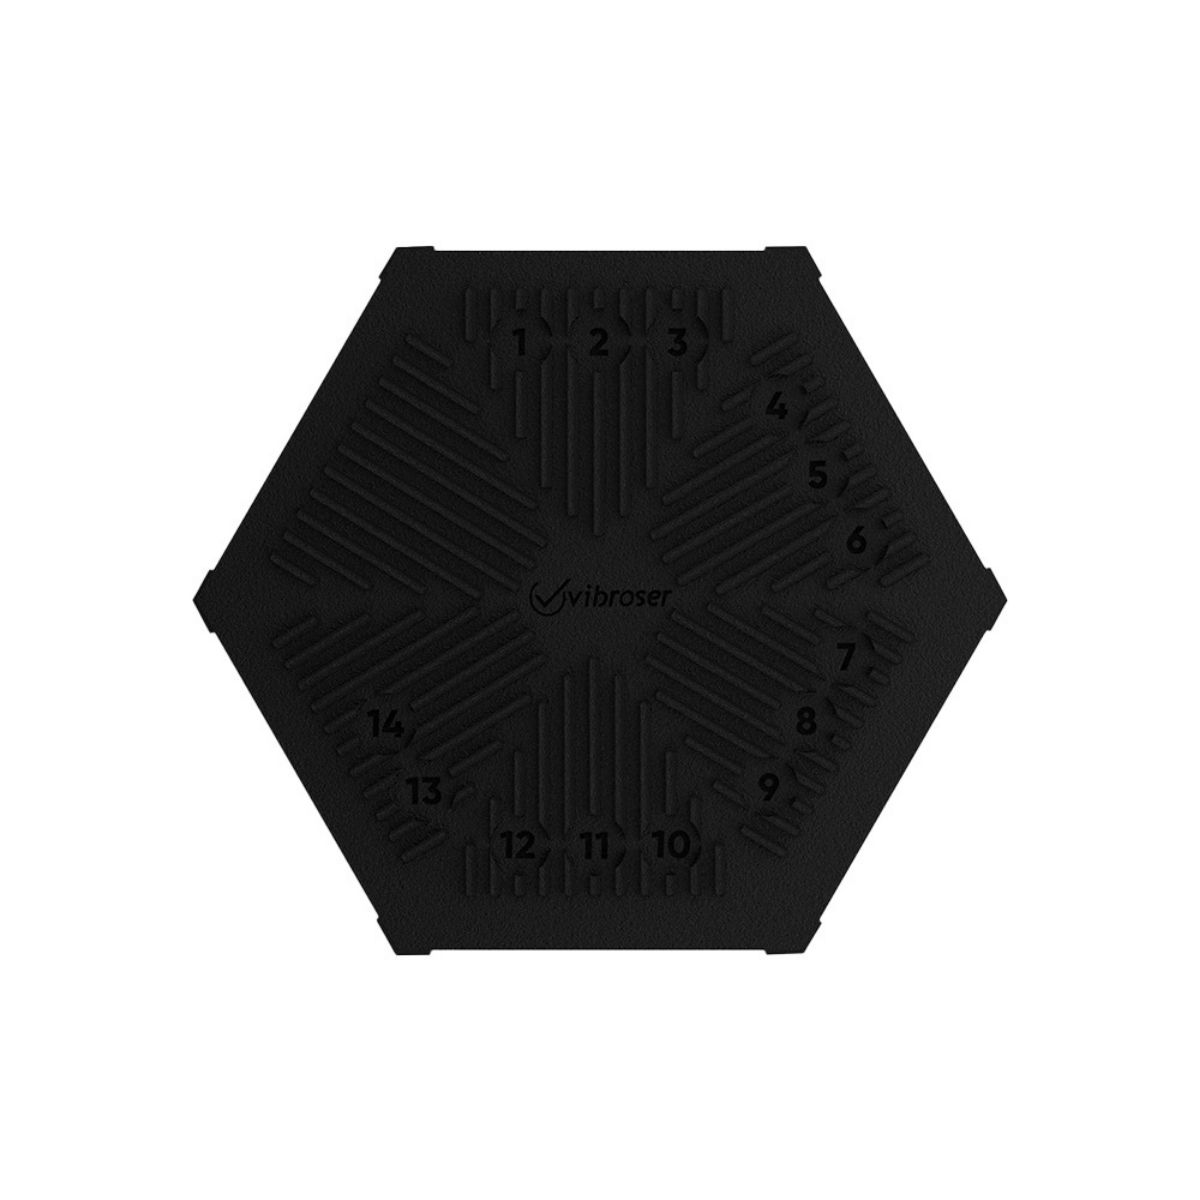 Hexagon Acid Proof Tile 100x116 Black